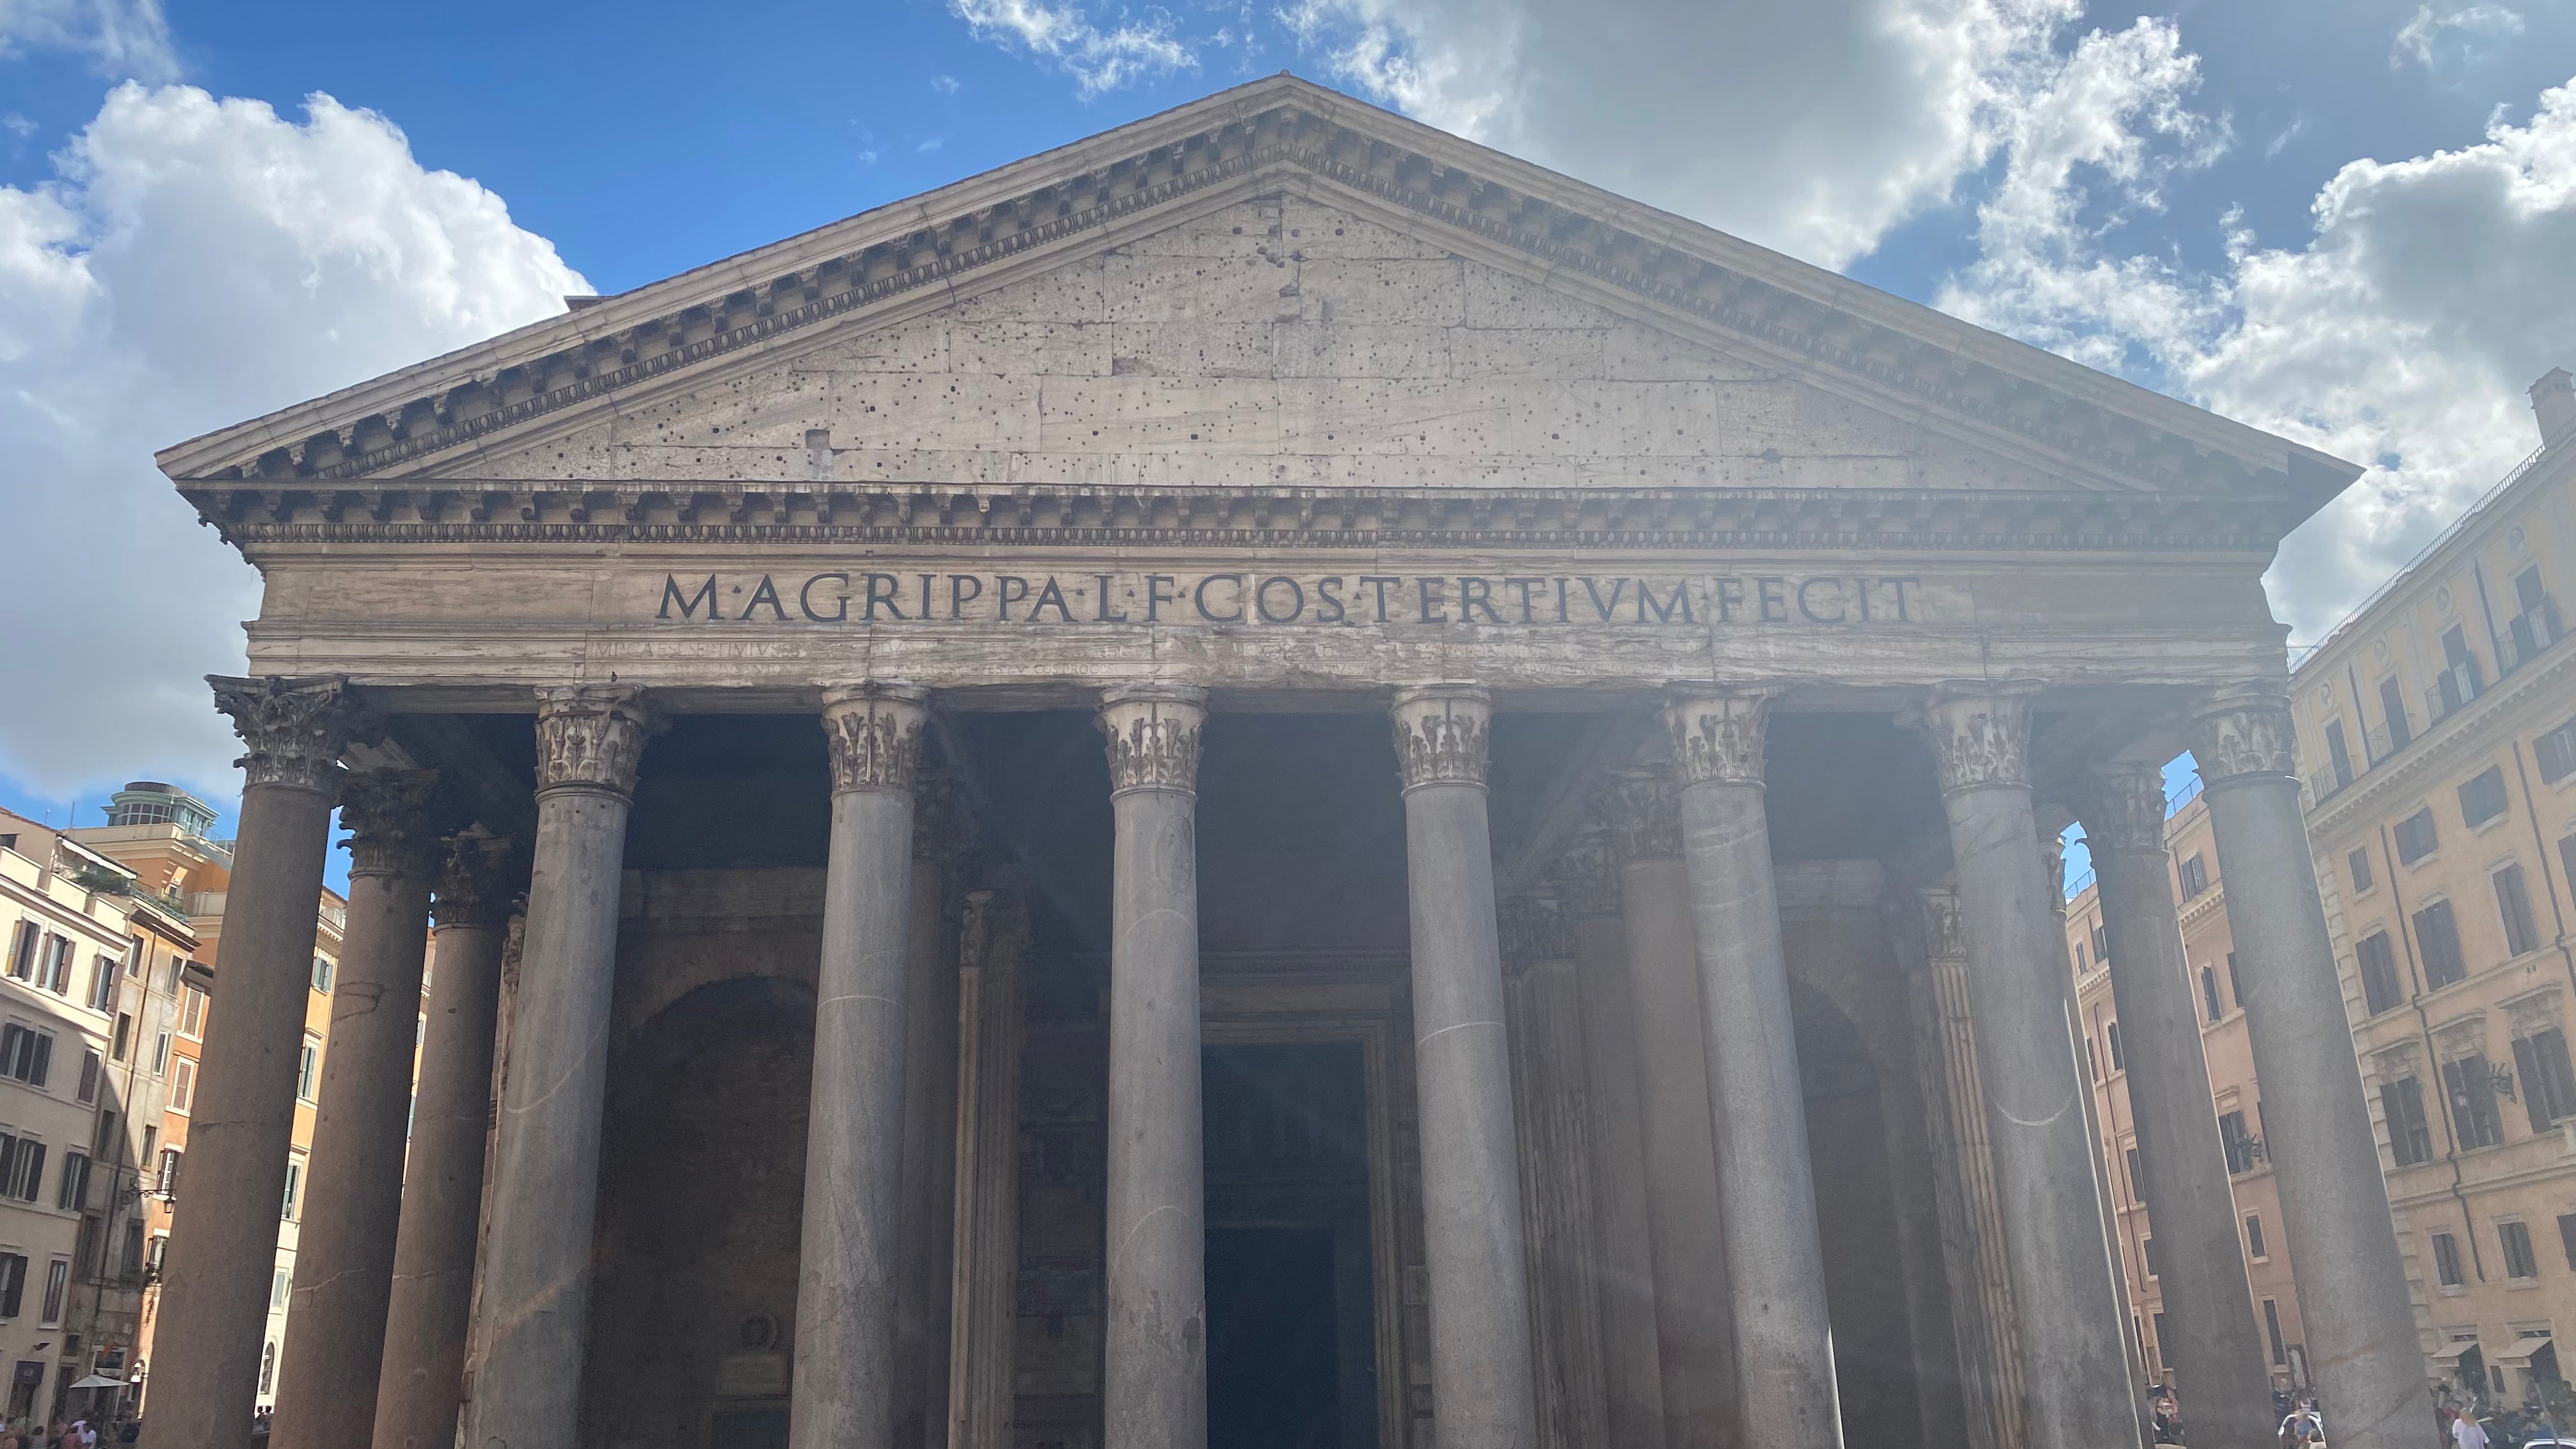 Rom - Mordet ved Pantheon